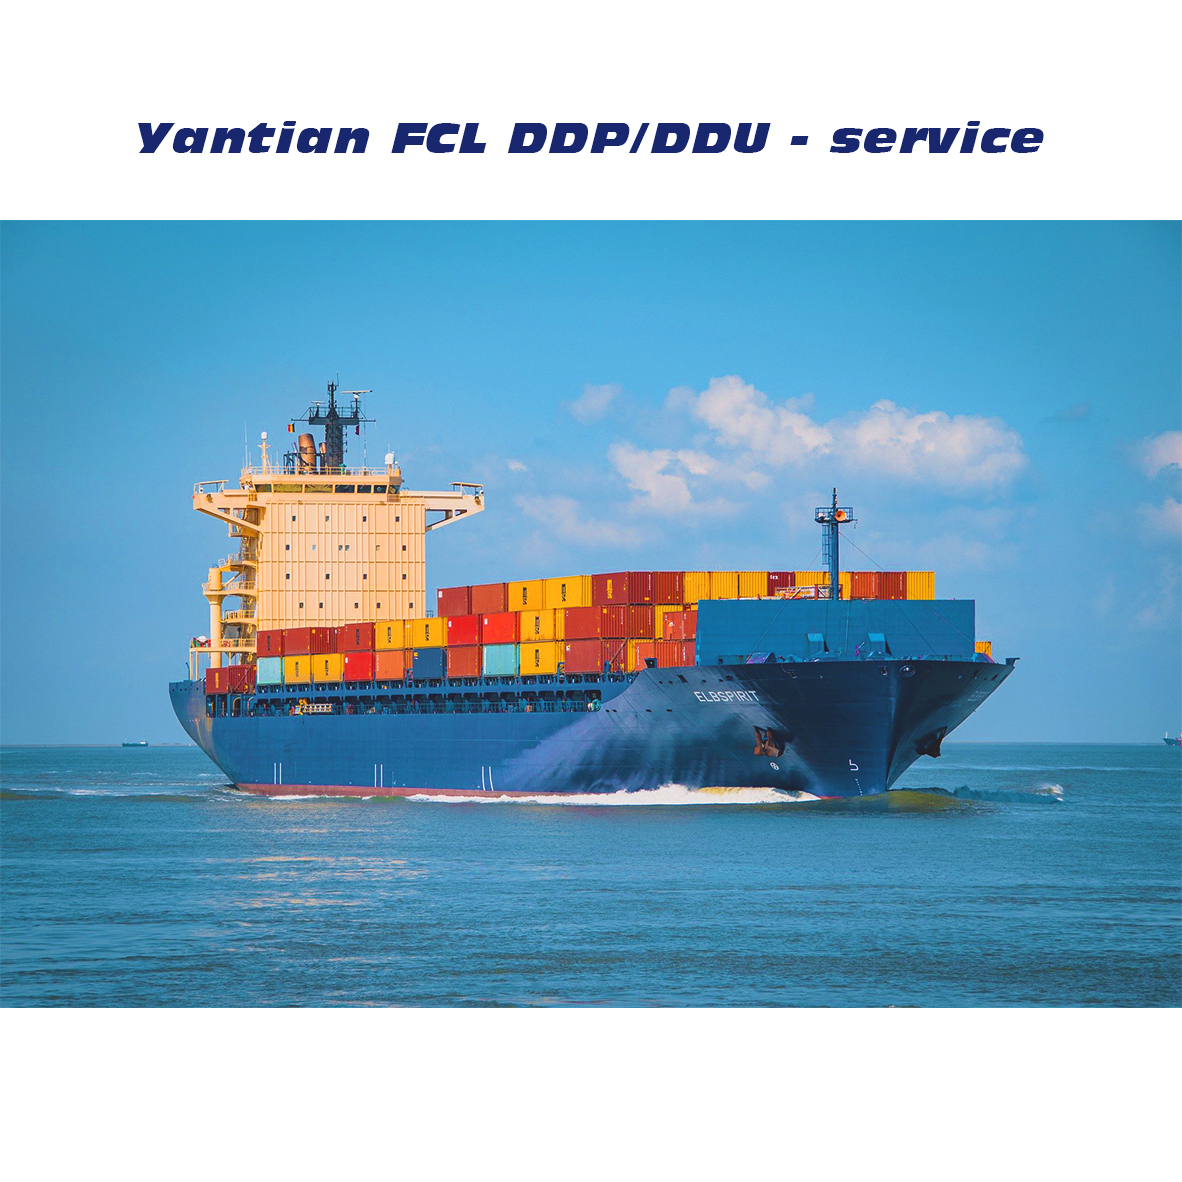 Yantian FCL DDP/DDU service